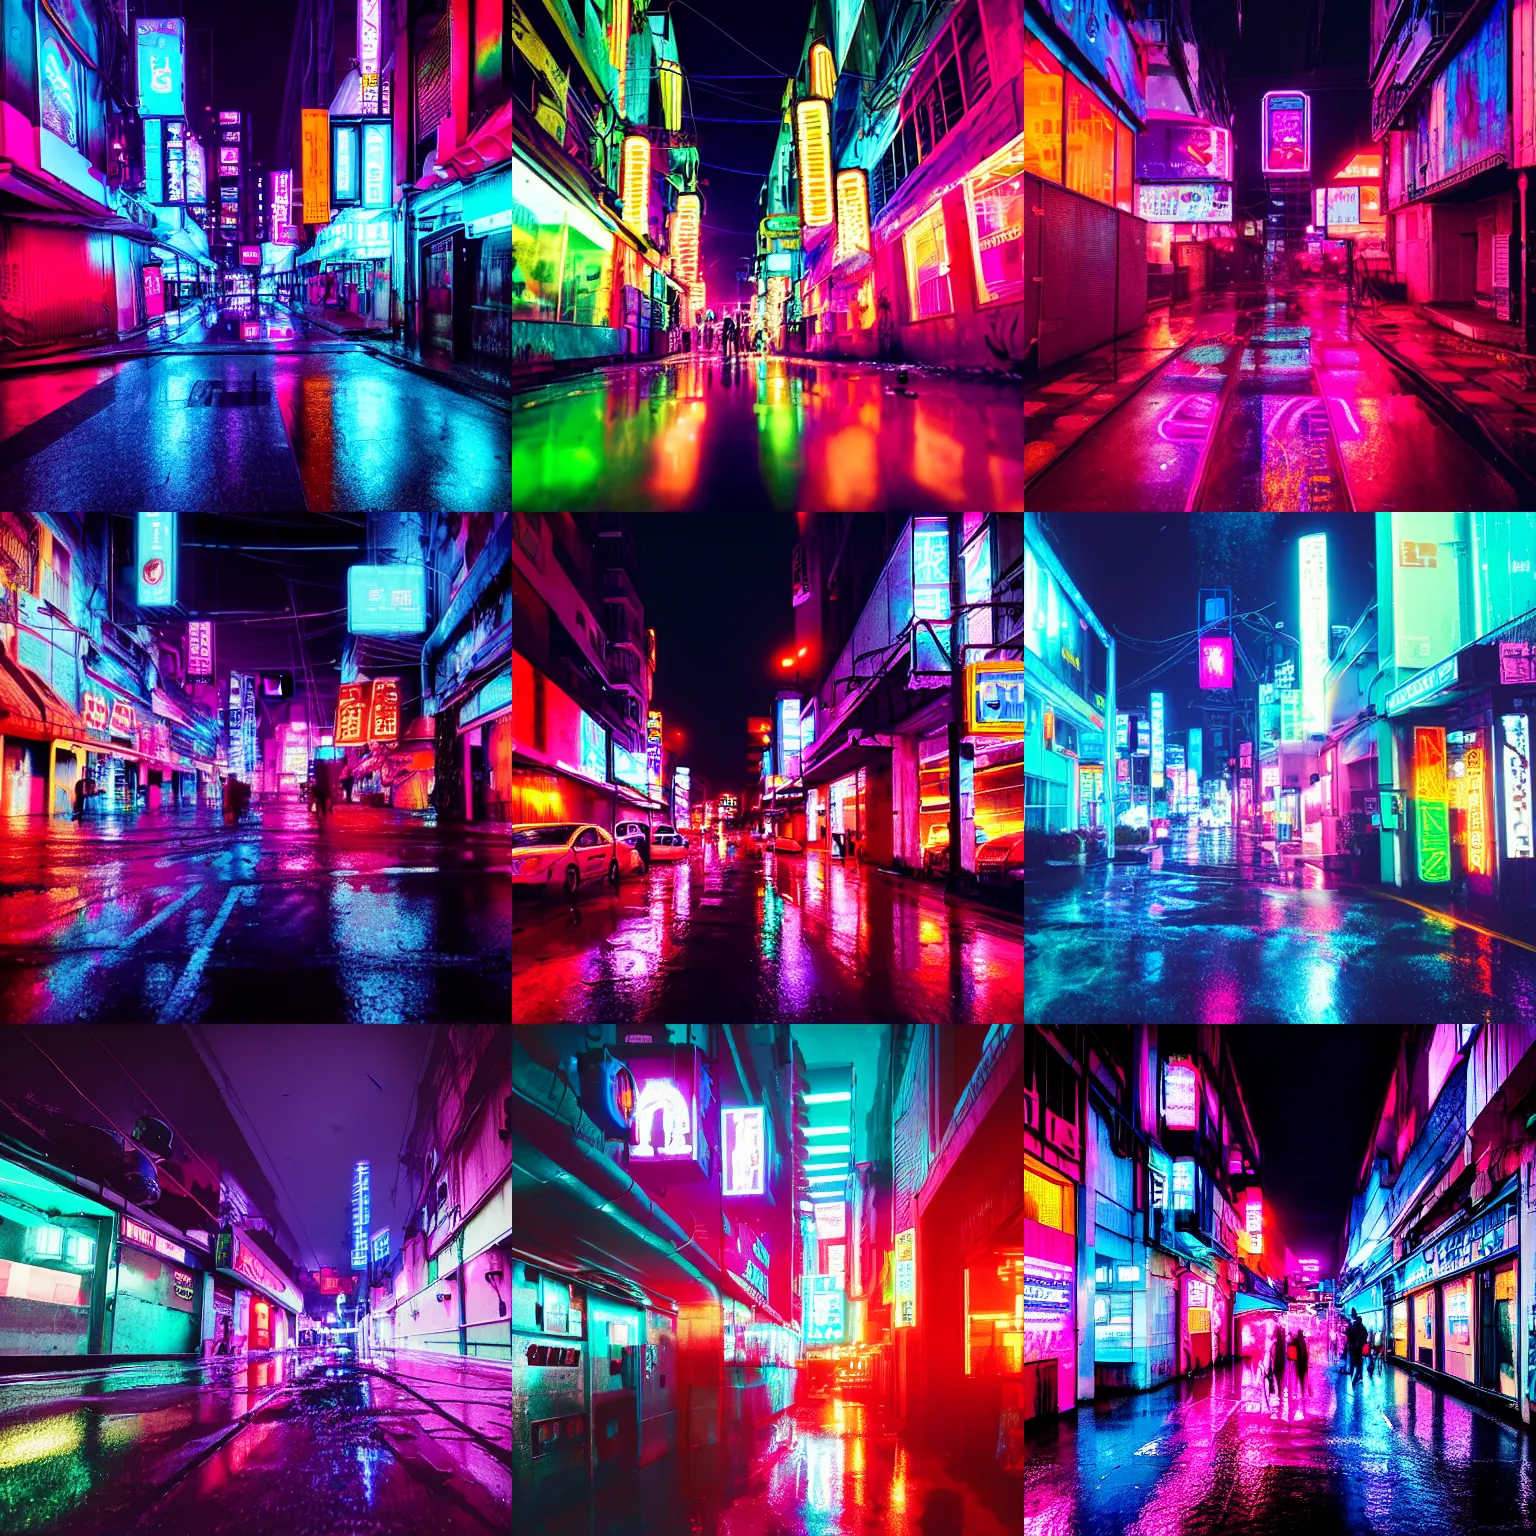 Prompt: colorful cyberpunk street, rain, neon lights, style of liam wong